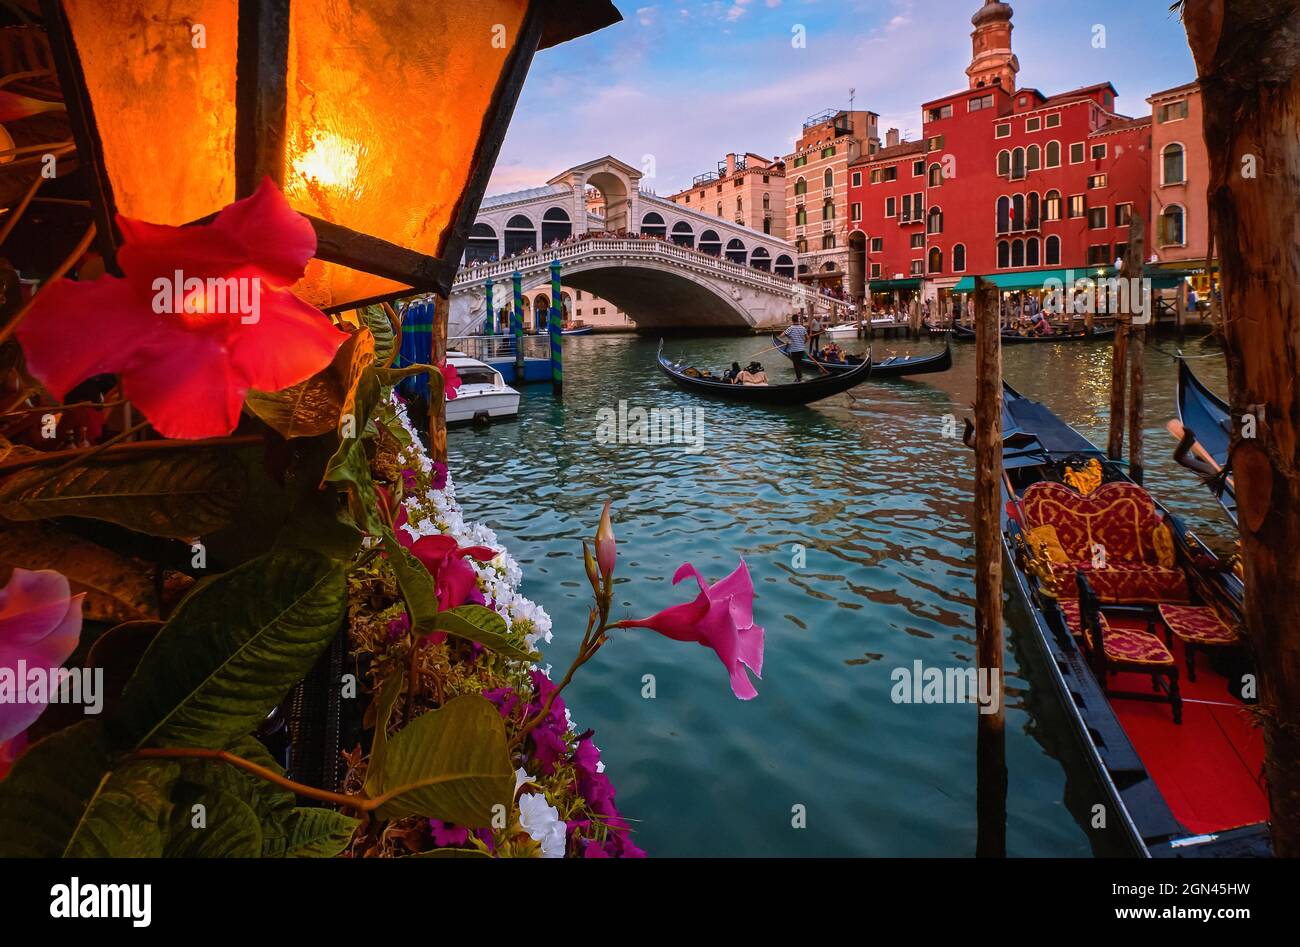 Berühmte Rialtobrücke oder rialtobrücke über den Canal Grande, Venedig, Italien. Ikonisches Reiseziel der UNESCO-Weltkulturerbestadt. Laterne, Gondeln Stockfoto